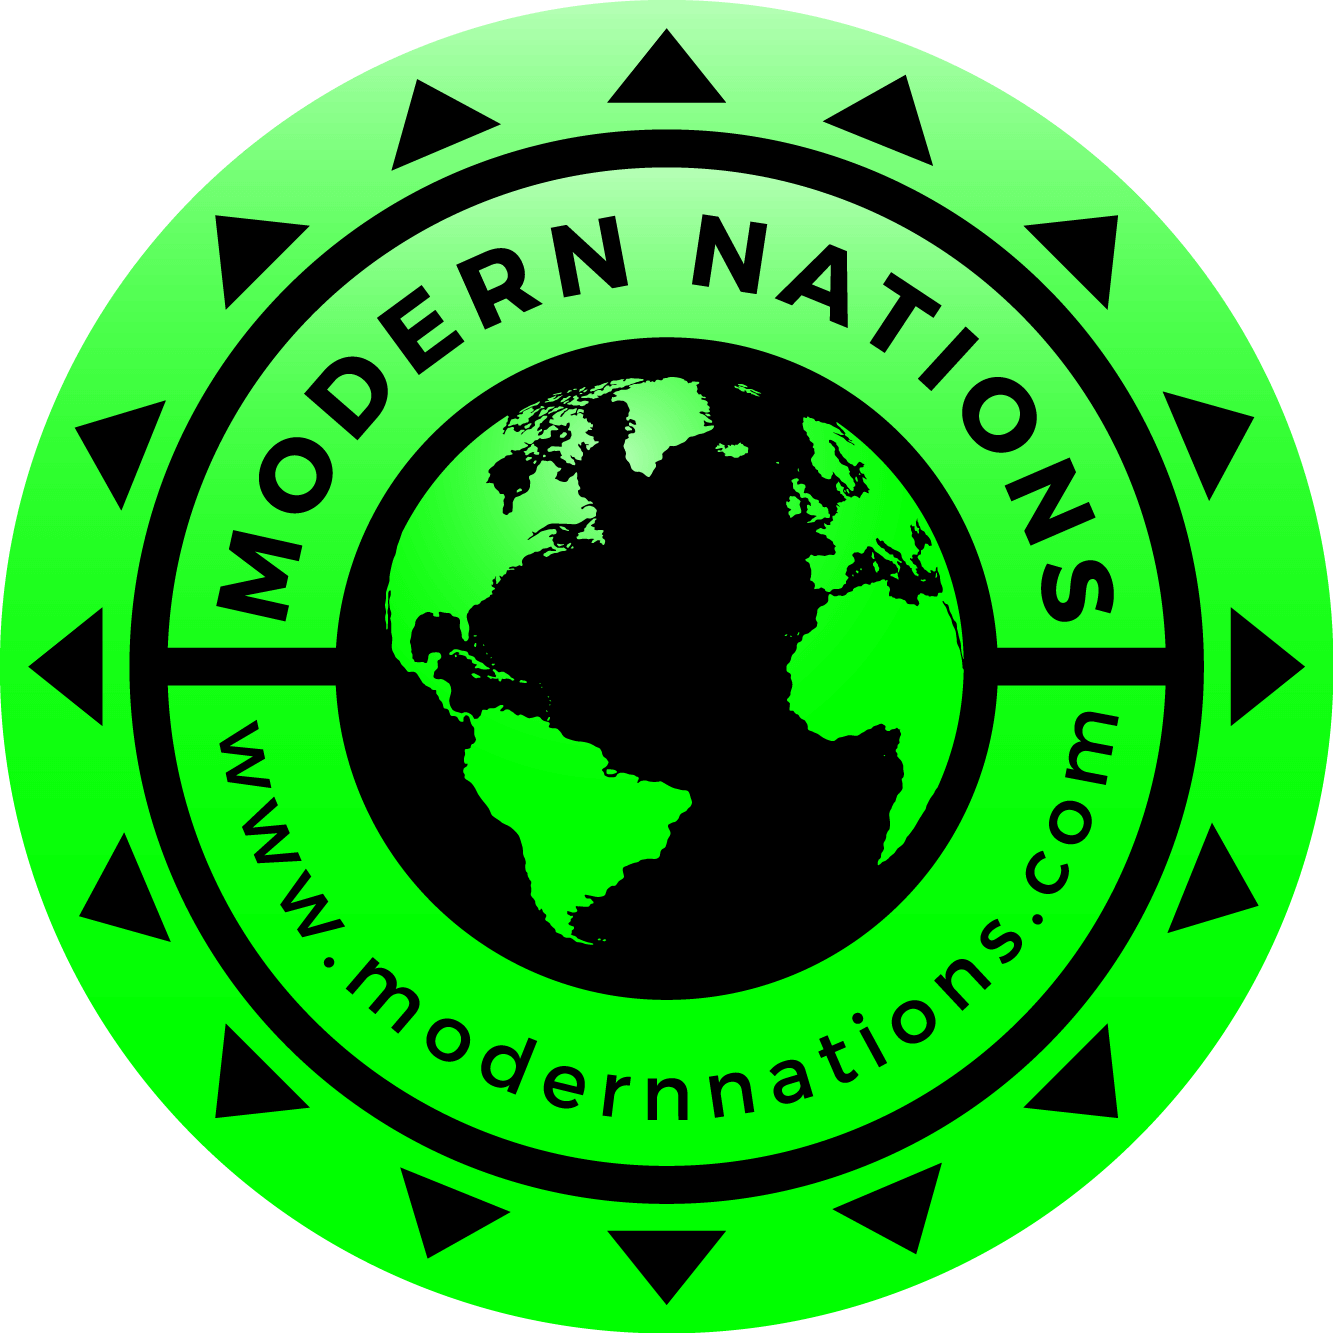 Modern Nations